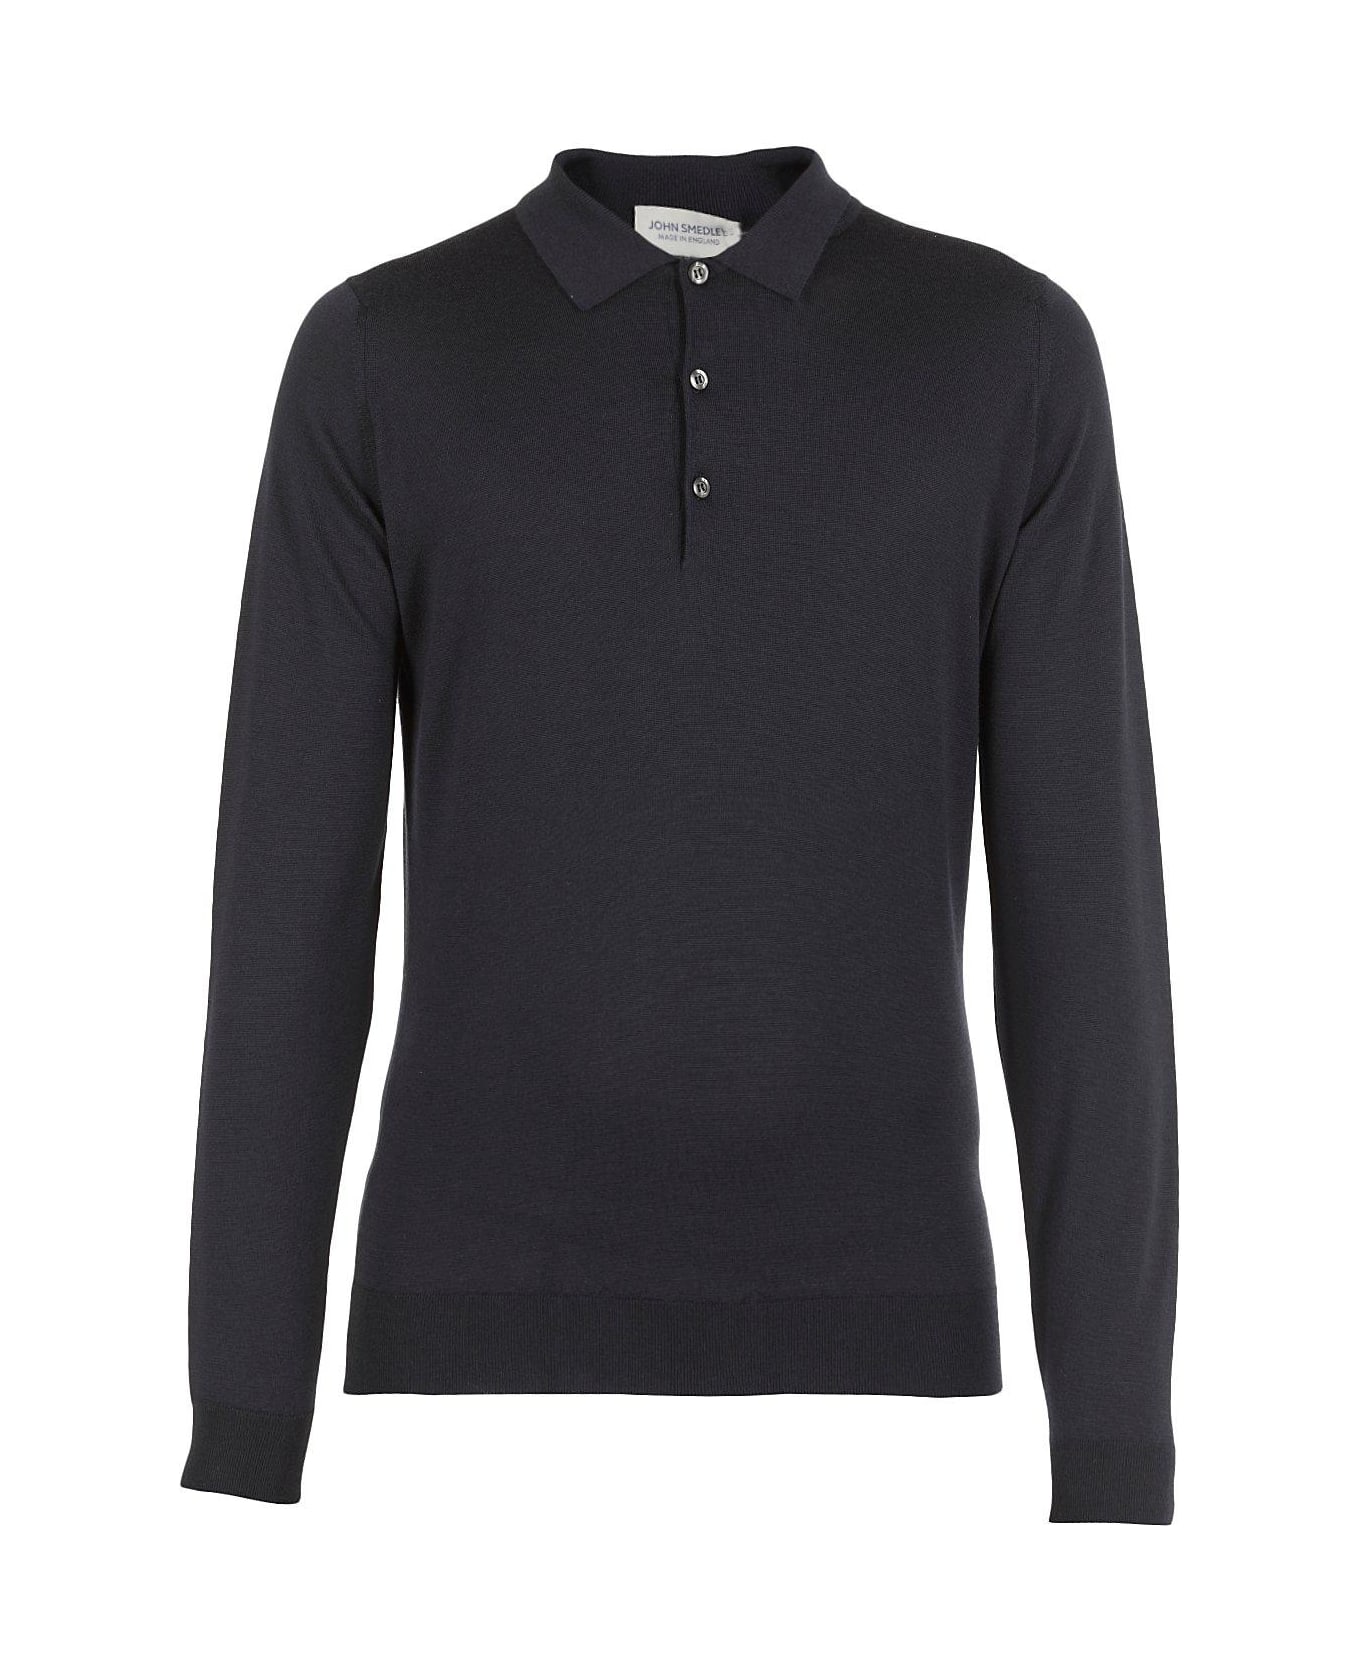 John Smedley Belper Buttoned Knitted Polo Shirt - Midnigt シャツ